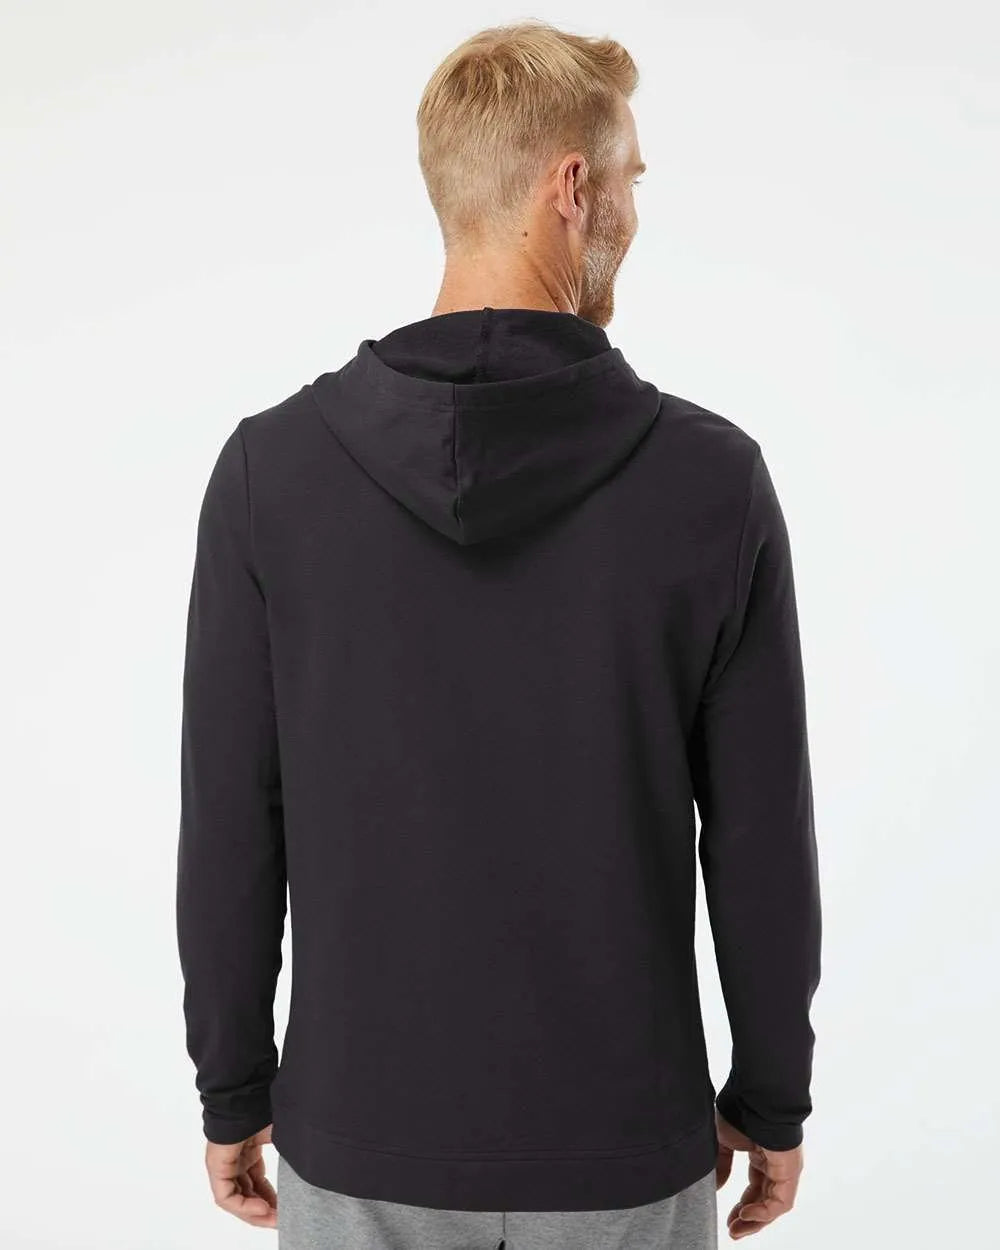 Lightweight Hooded Sweatshirt - A450 - Print Me Shirts